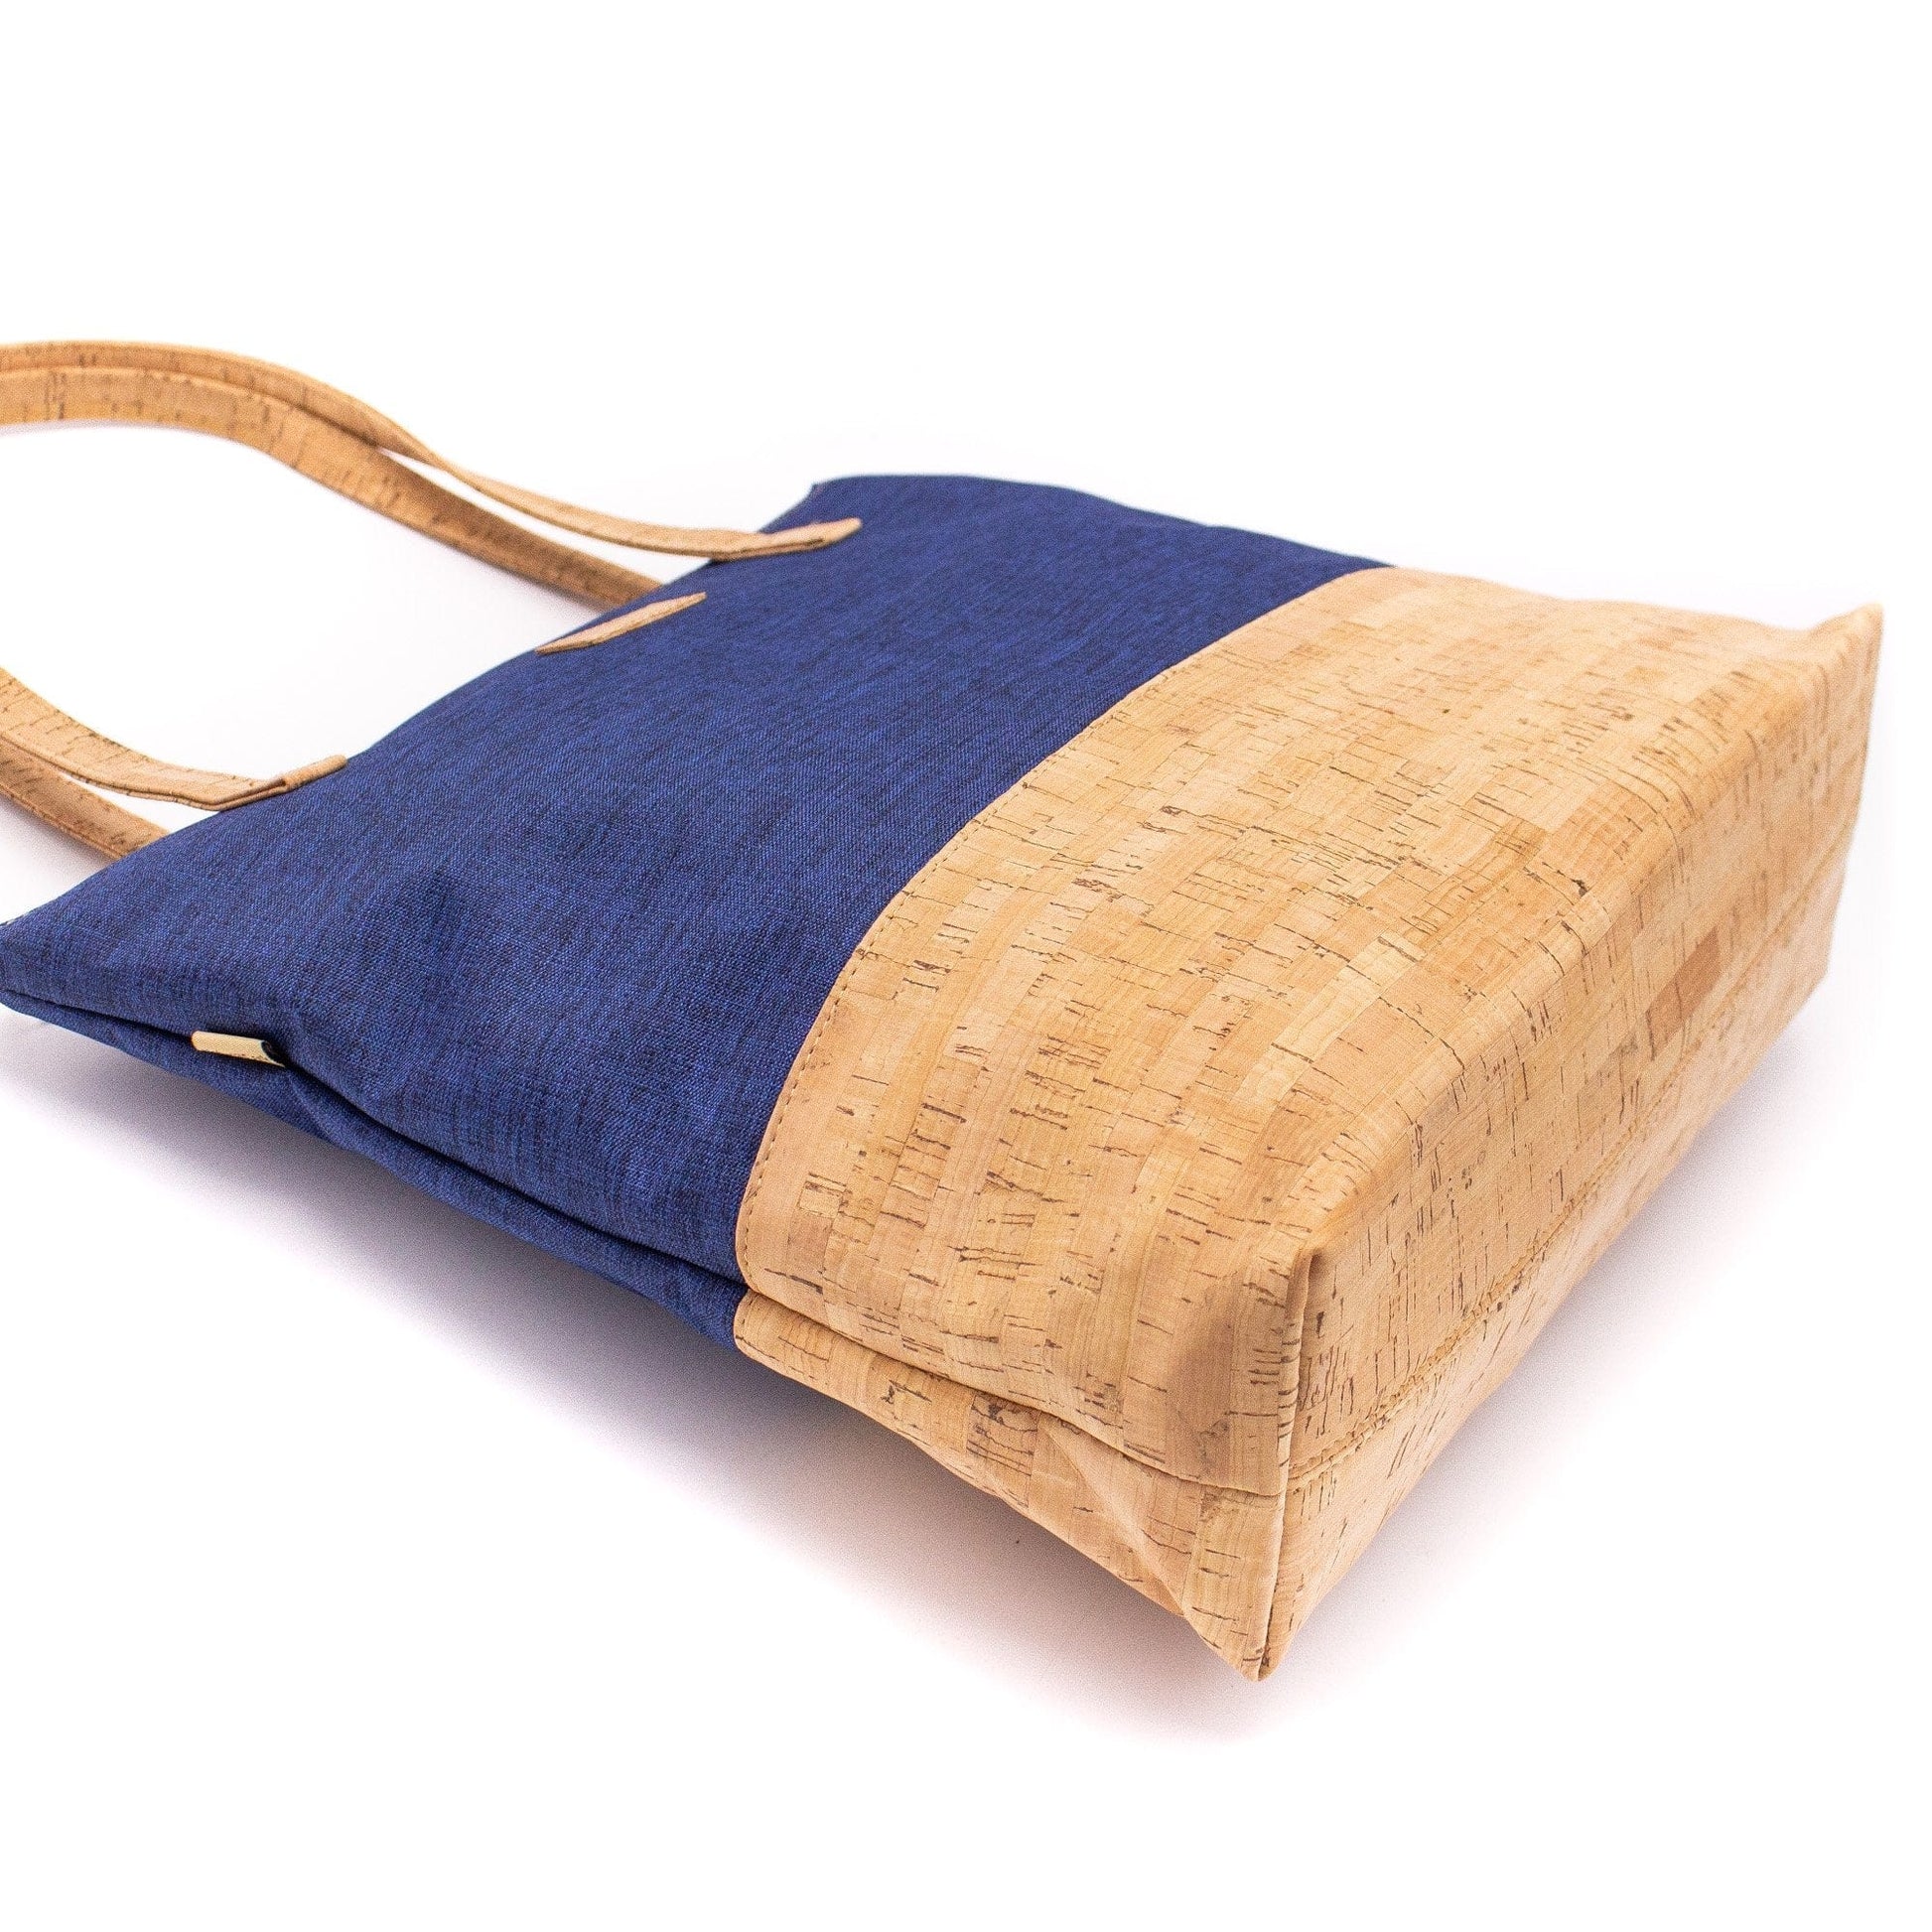 Vegan Women's Cork Tote Bag with Blue Denim Fabric | BAG-2057-C - Premium Totes & Beach Bags - Just €65.95! Shop now at San Rocco Italia